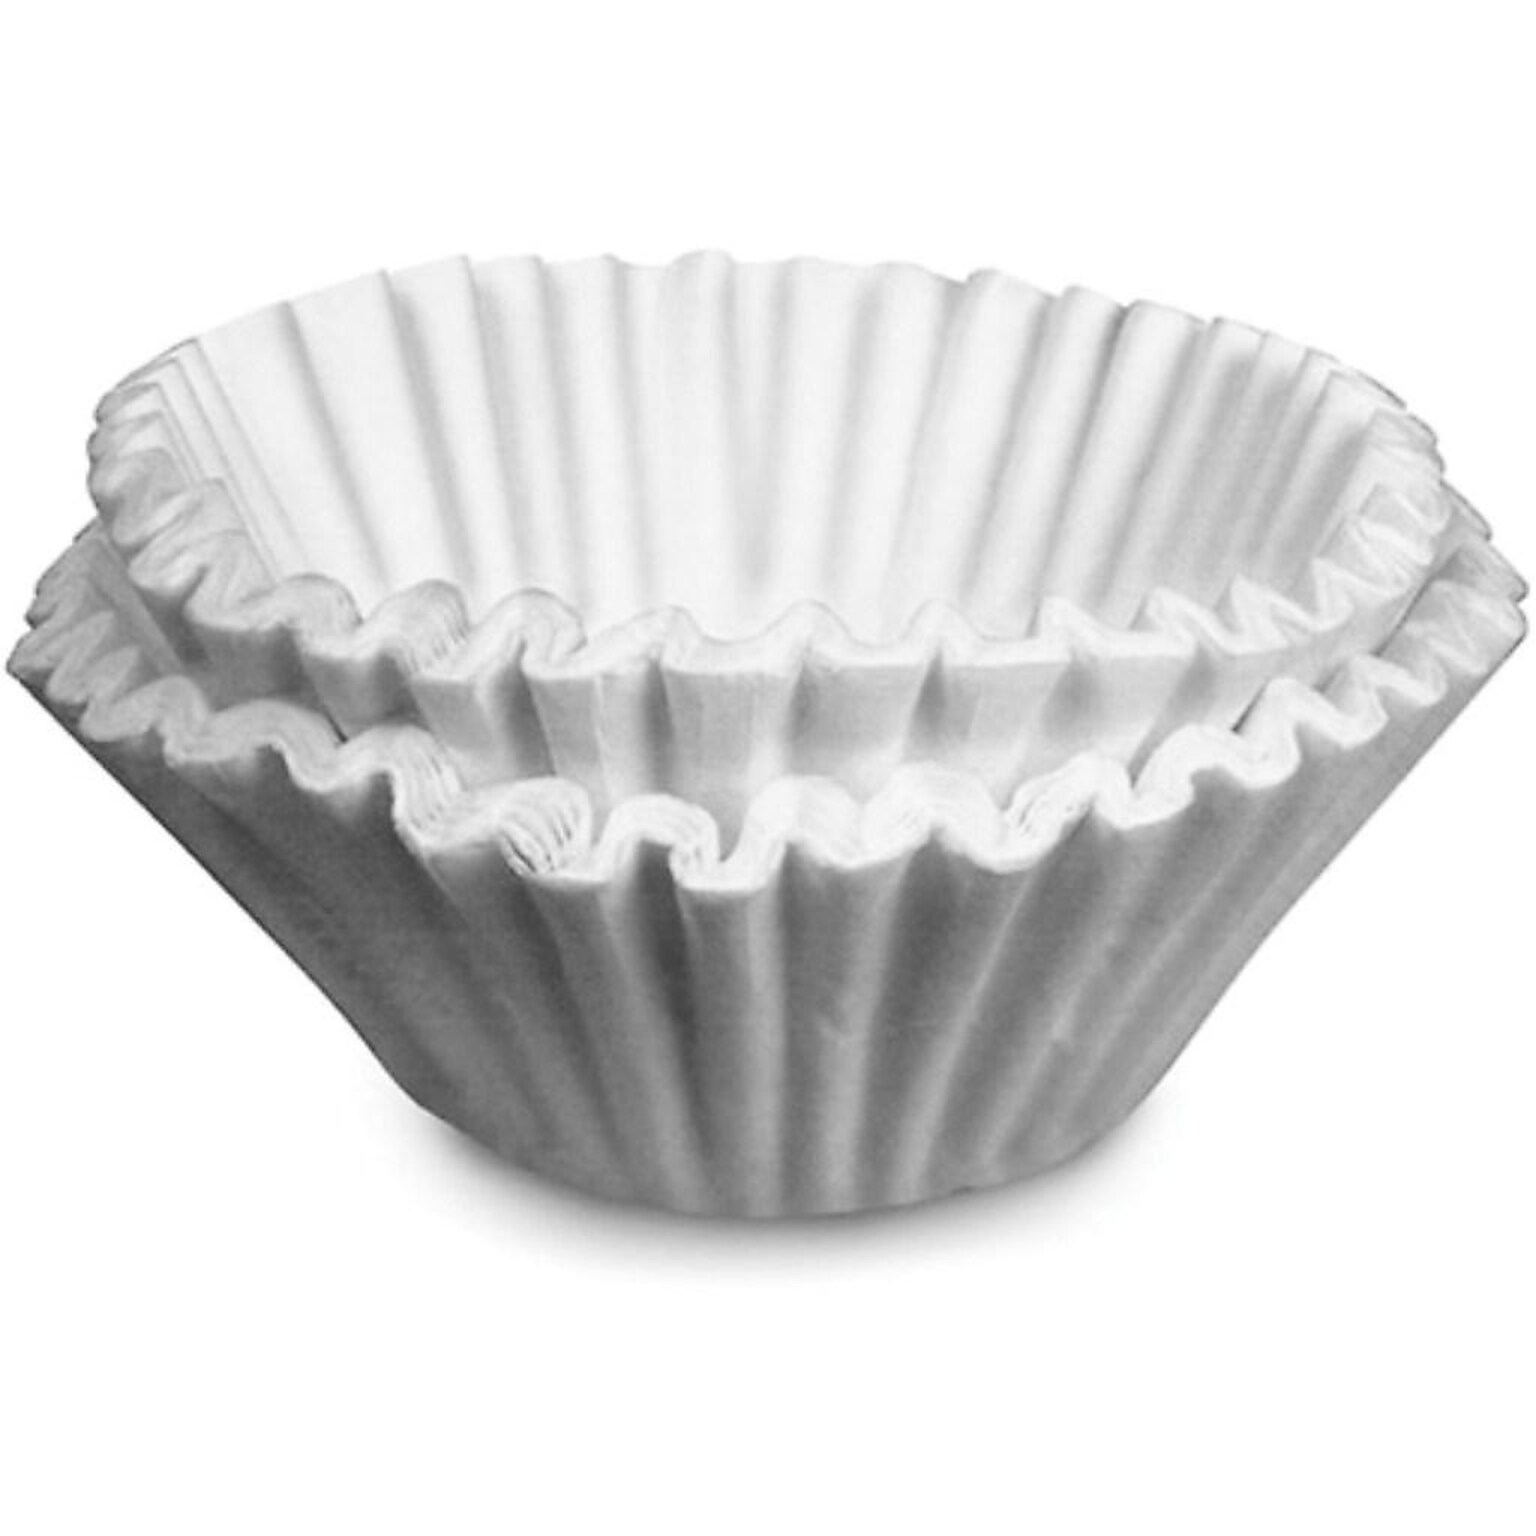 Bunn 12-Cup Paper Coffee Filter, Basket, 1000/Carton (BUN39800R)